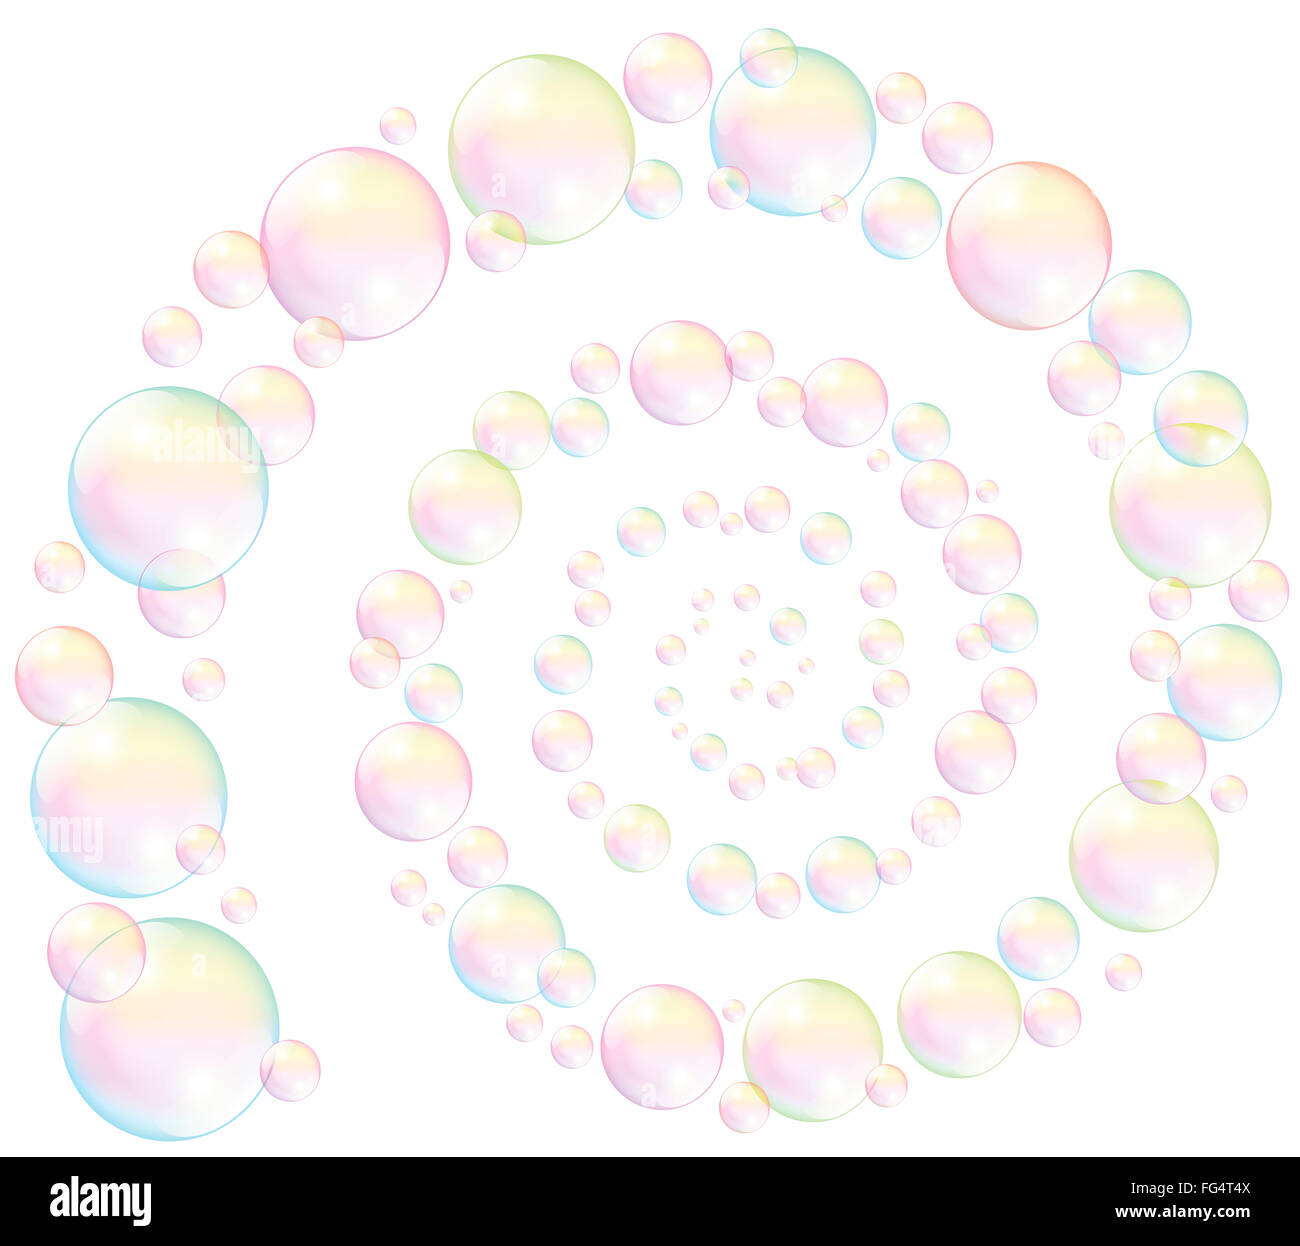 Soap bubbles spiral - illustration on white background. Stock Photo